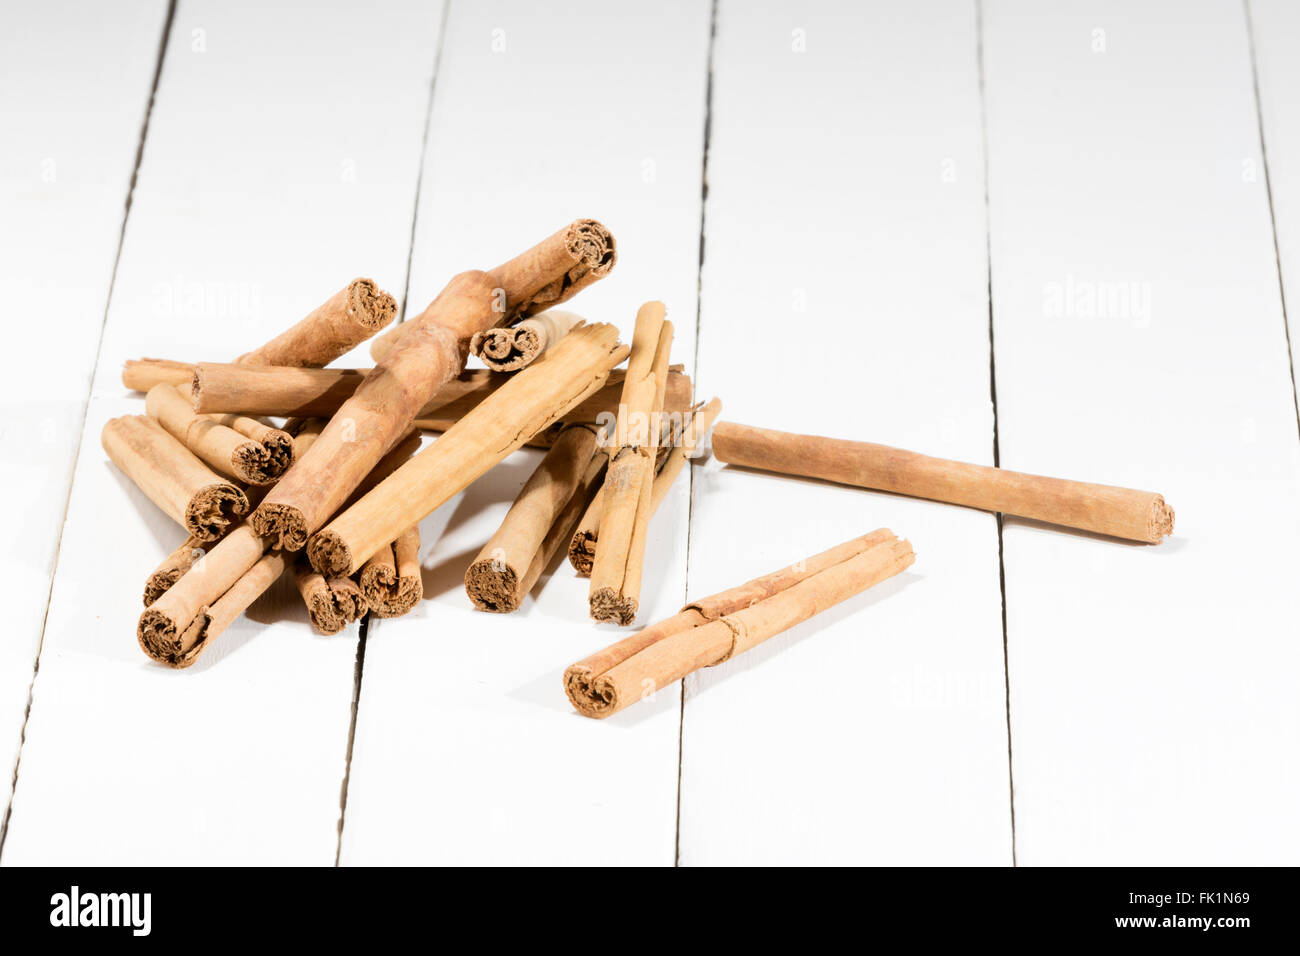 cinnamon sticks pile on a white wooden table Stock Photo